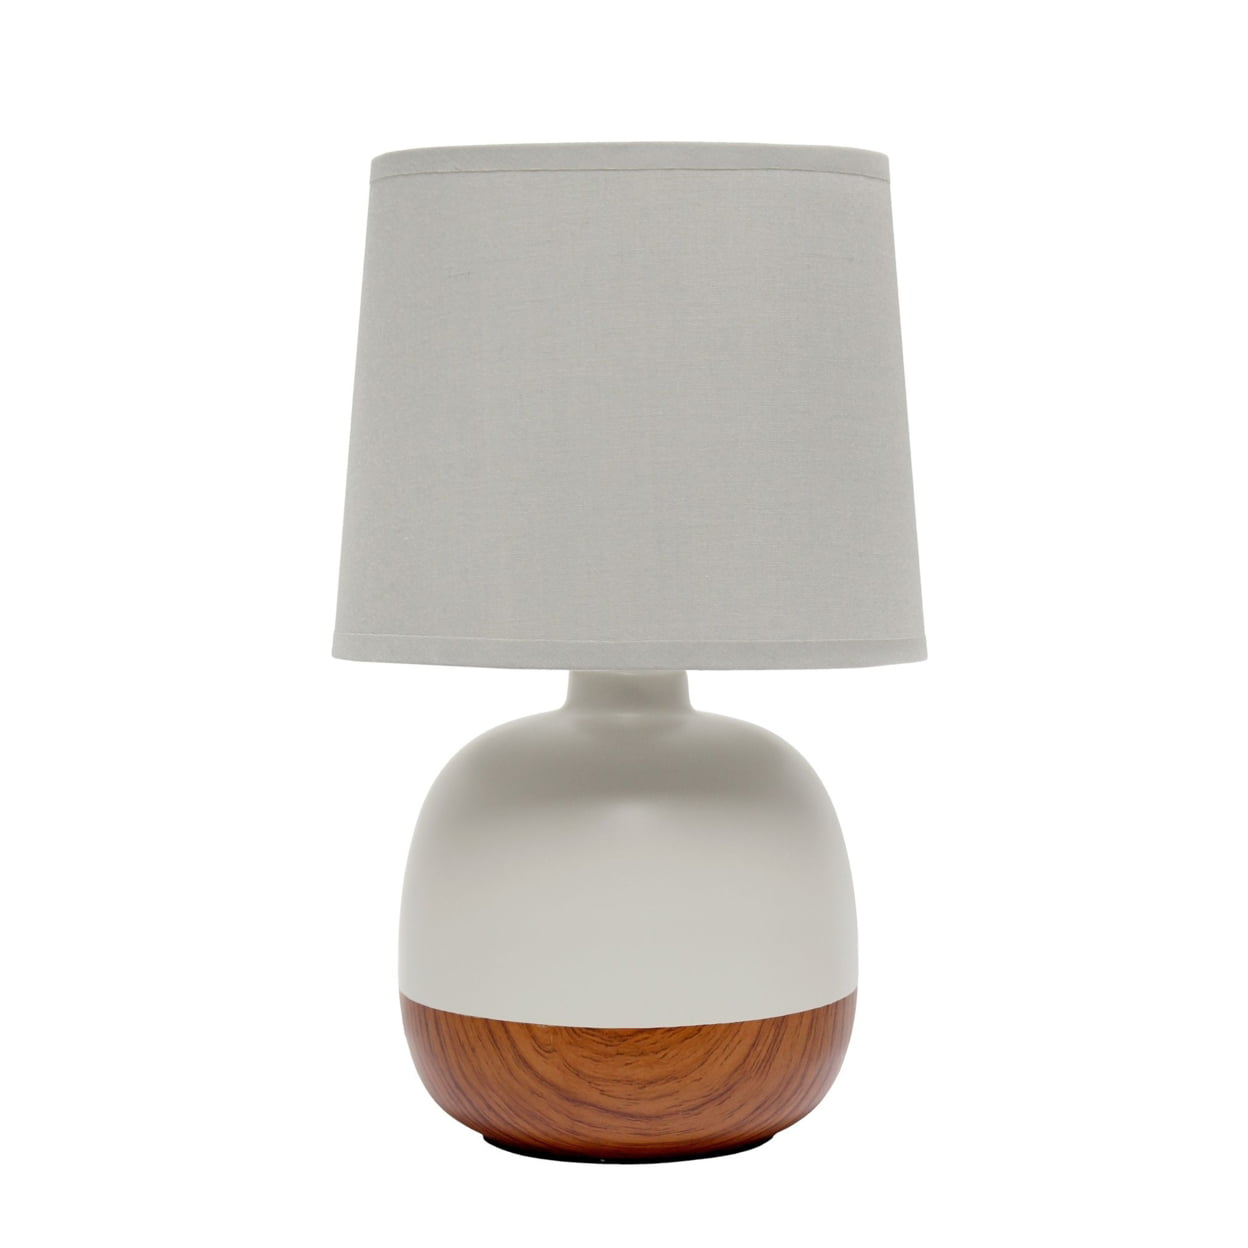 Simple Designs Petite Mid Century Table Lamp, Dark Wood and Light Gray